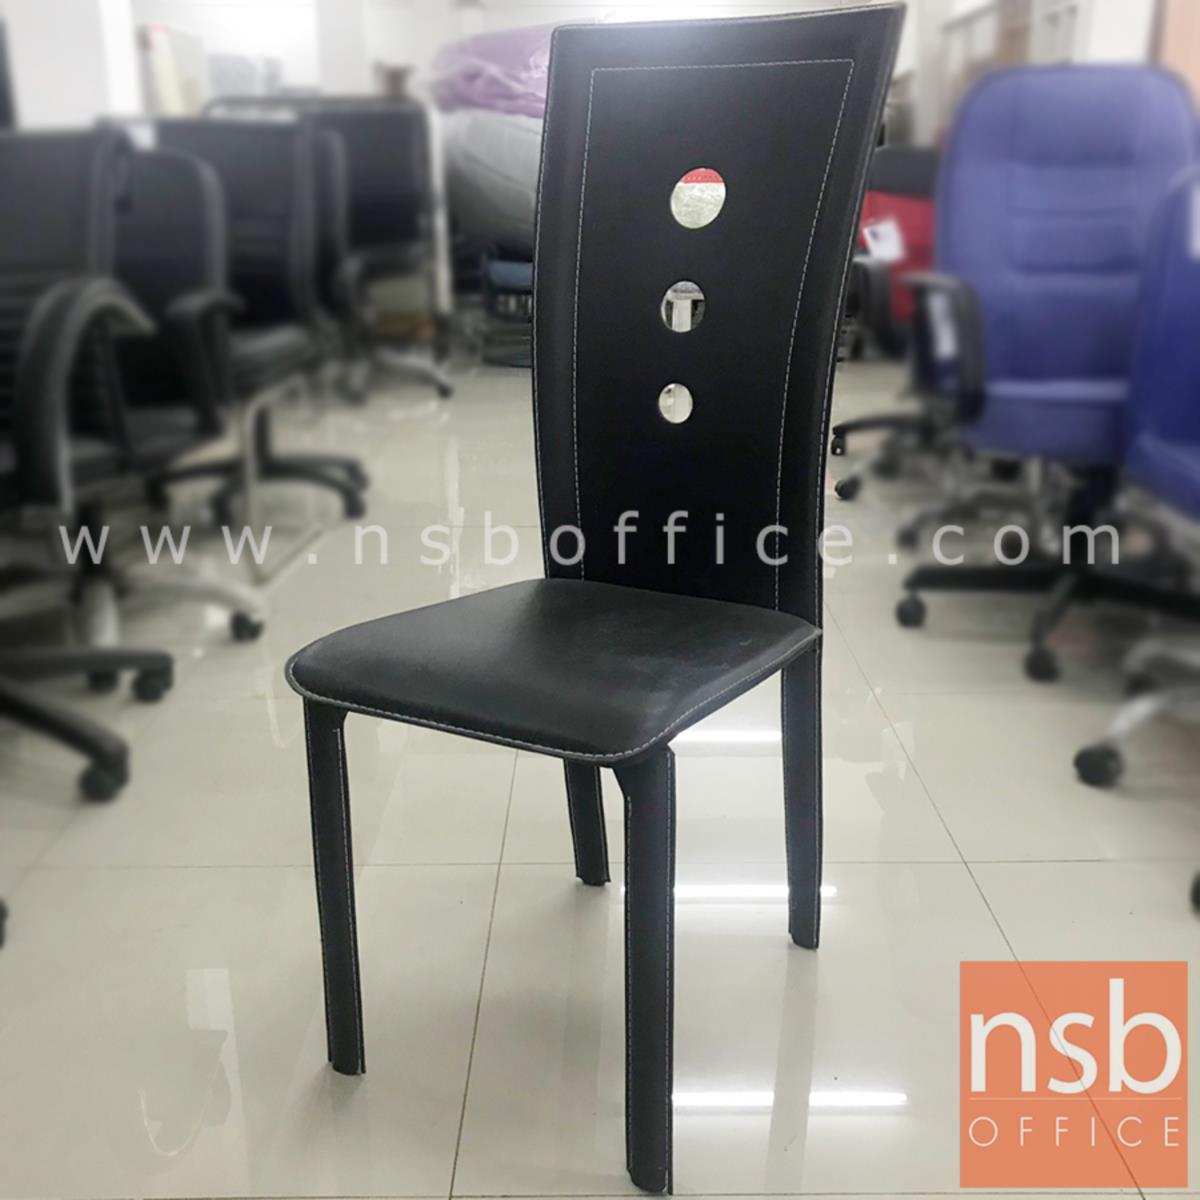 L02A323:เก้าอี้โมเดิร์นหนังเทียมลายวงกลม รุ่น NSB-CHAIR37 ขนาด 39W*100H cm.  โครงไม้ (STOCK-1 ตัว)